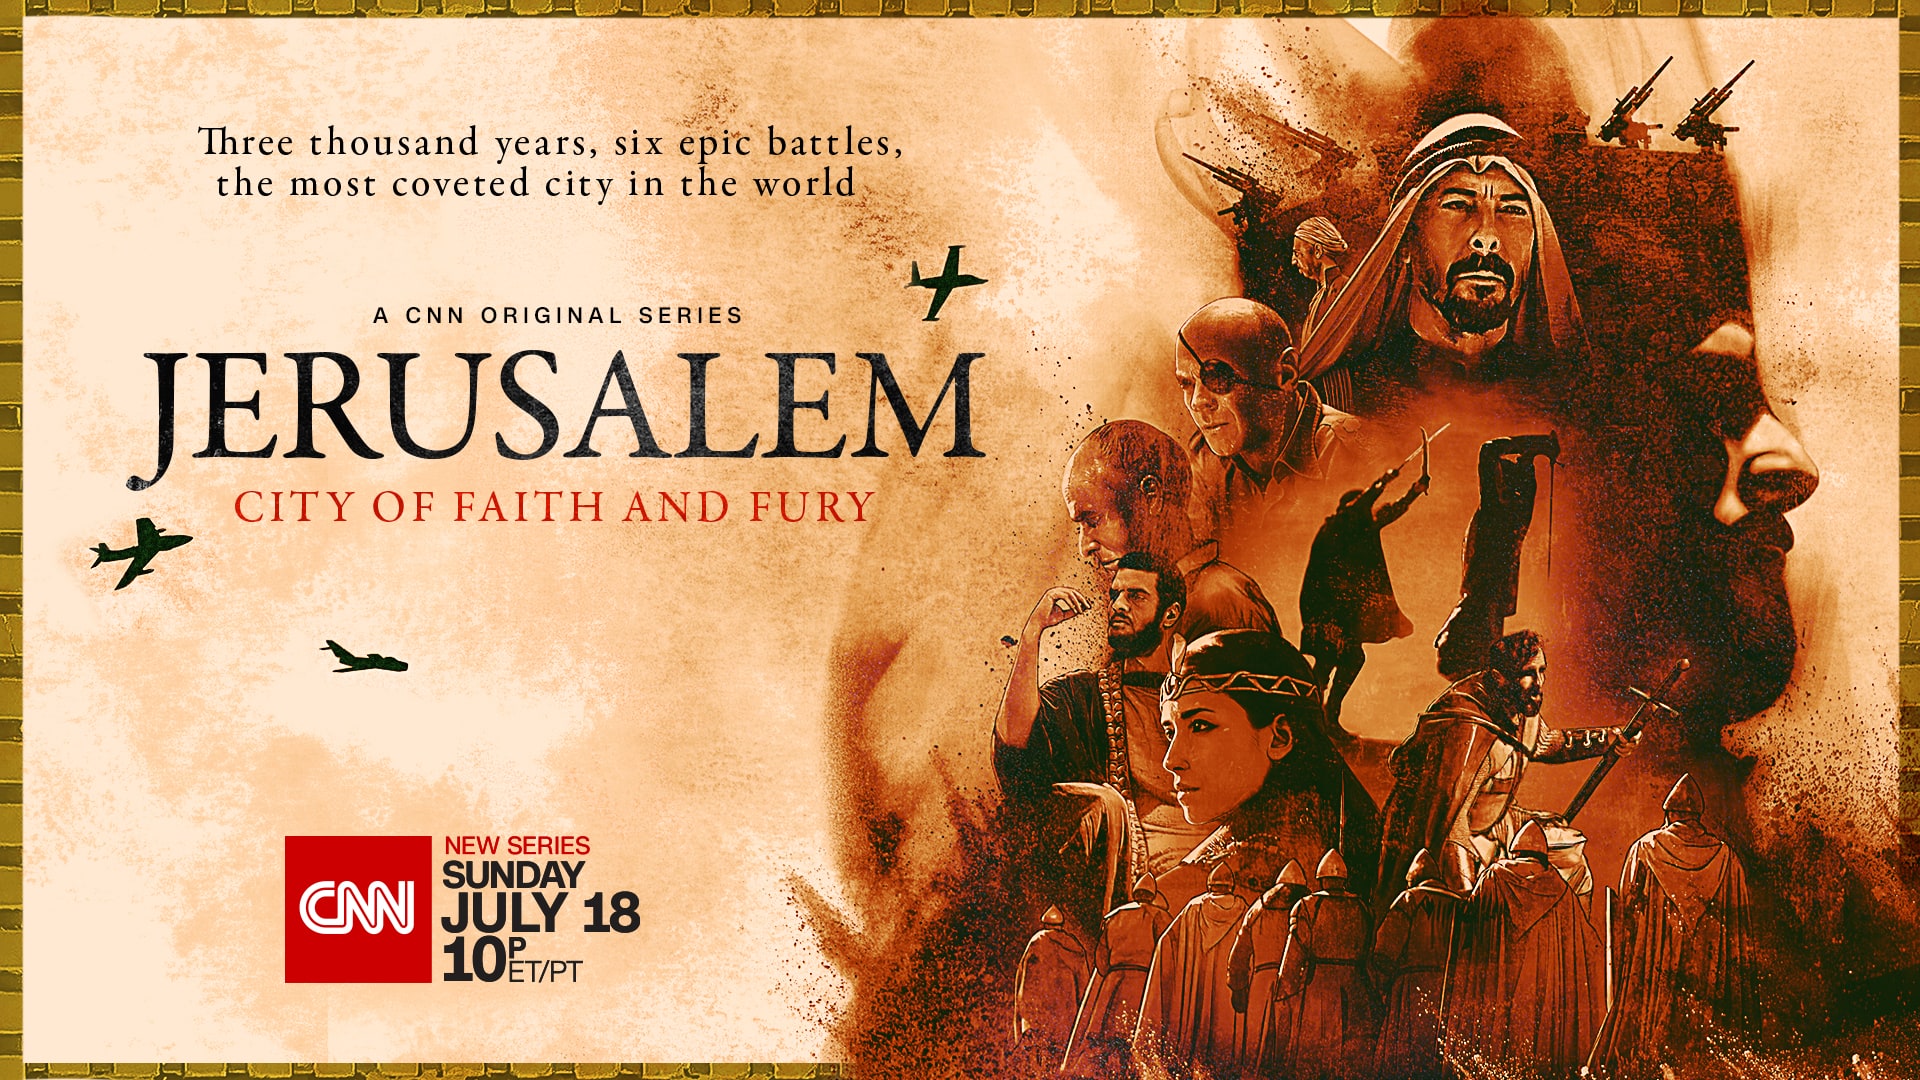 Jerusalem: City of Faith and Fury